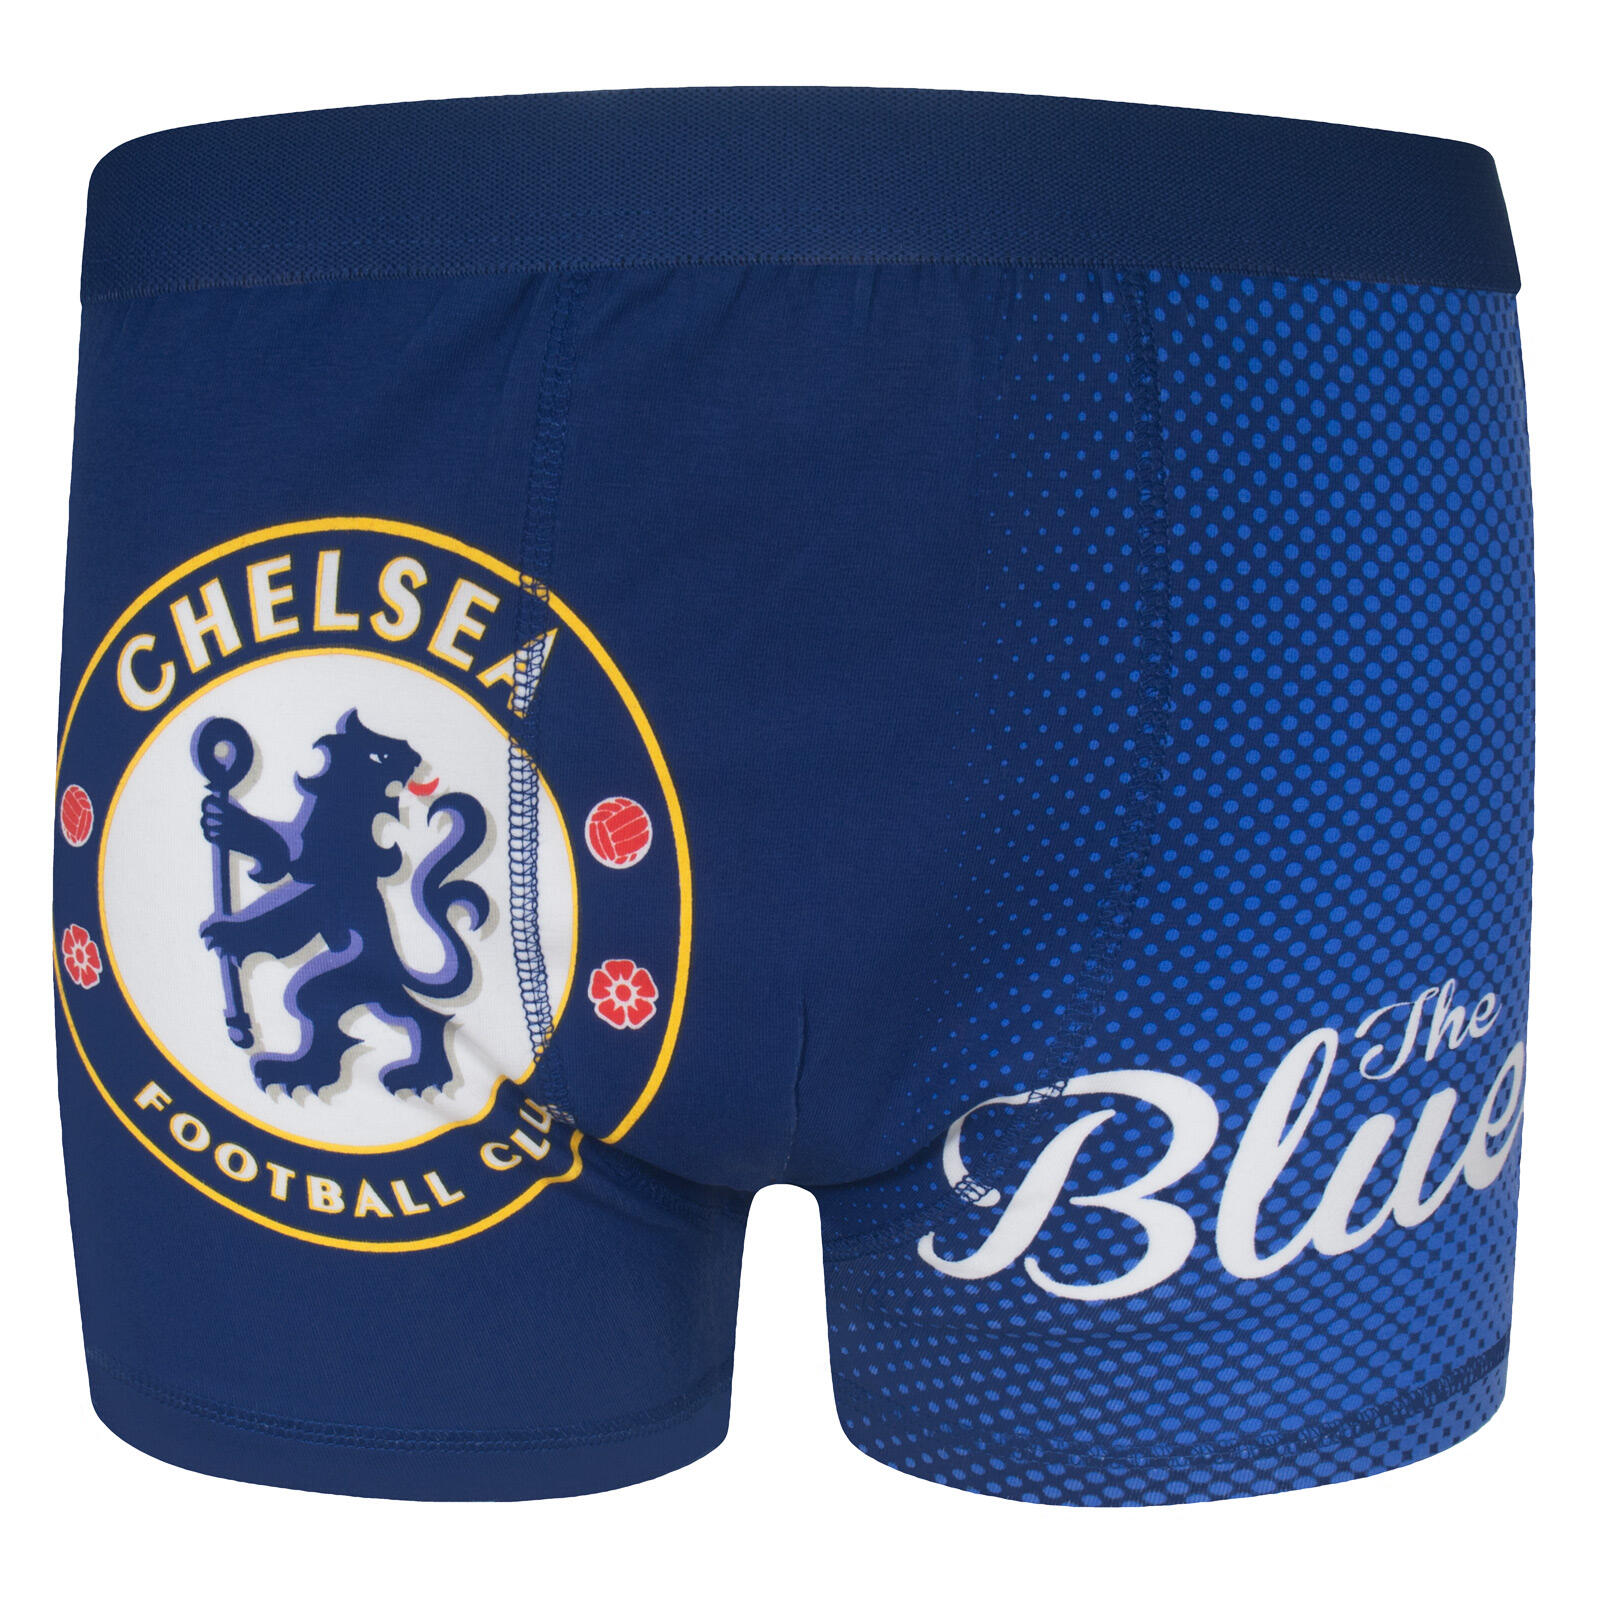 CHELSEA Chelsea FC Boys Boxer Shorts Blue 1 Pack OFFICIAL Football Gift